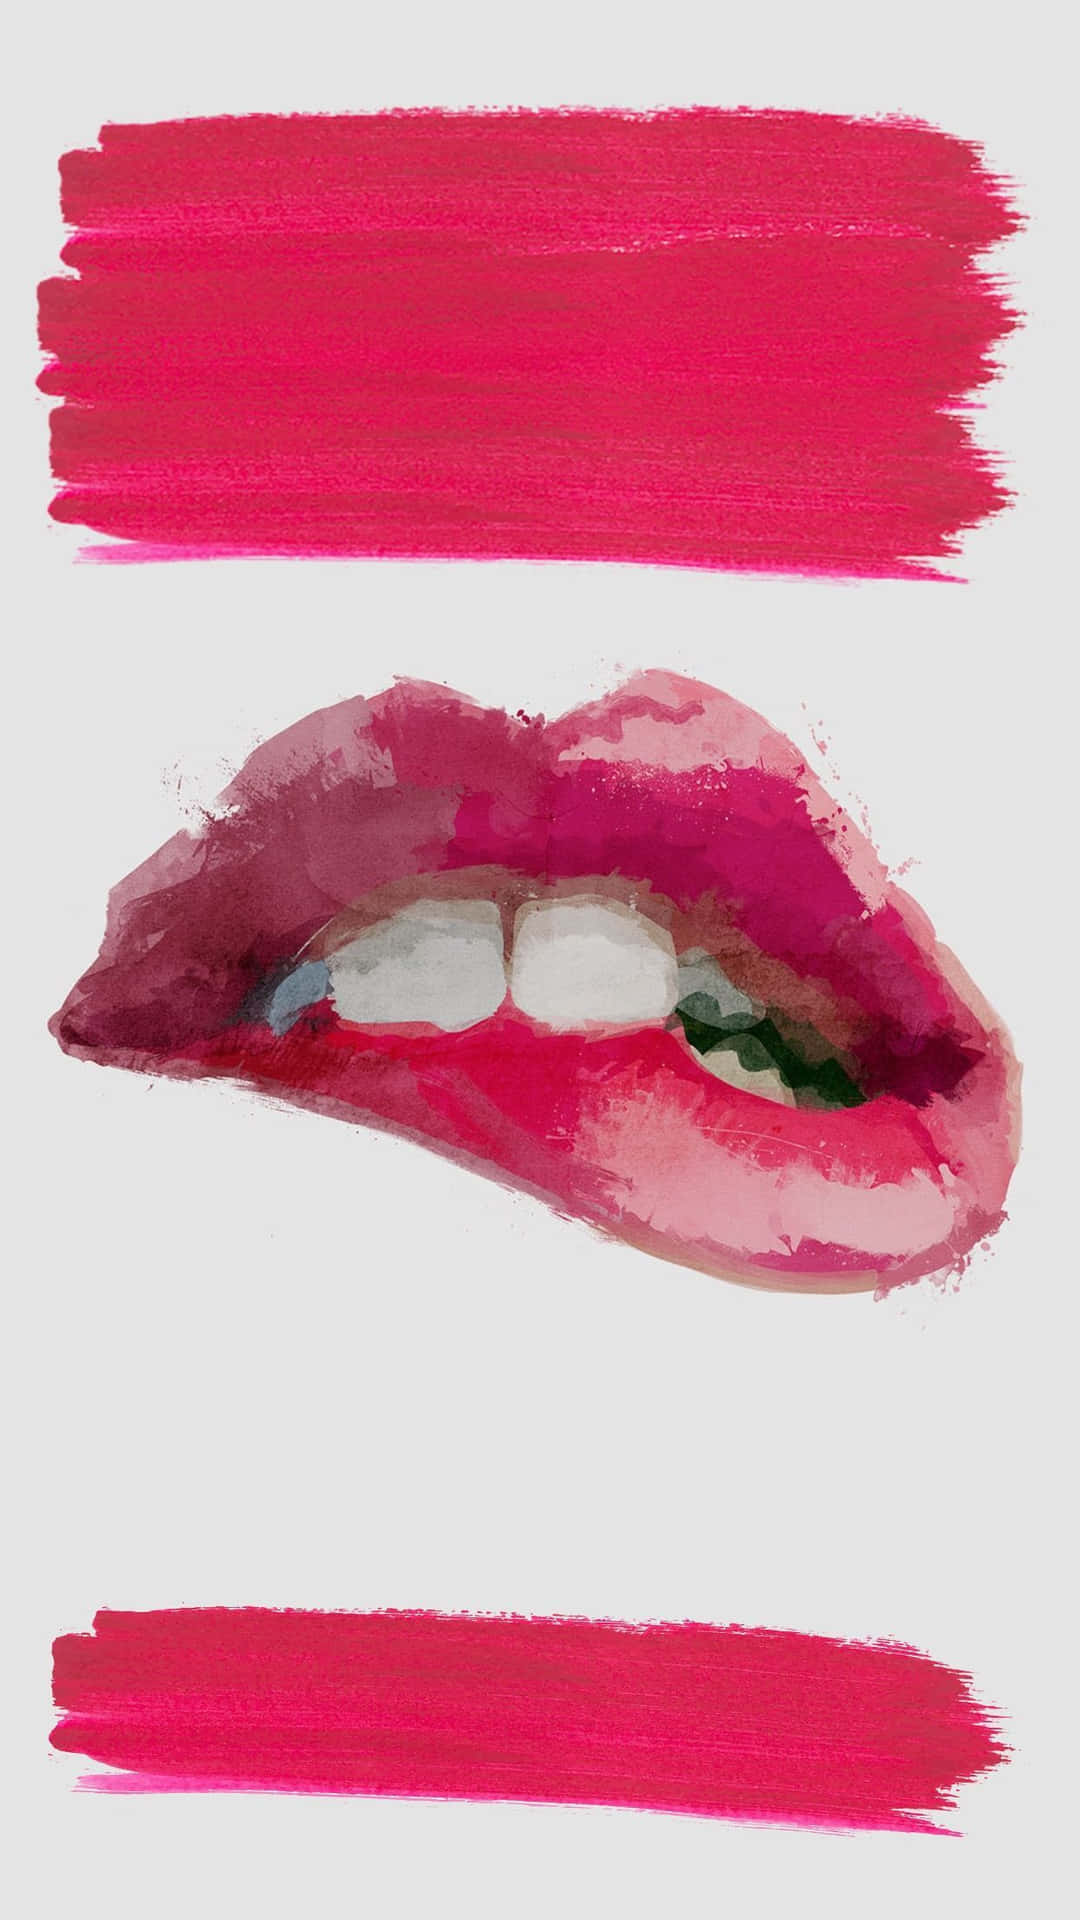 Radiant Pink Lips Making A Statement Wallpaper